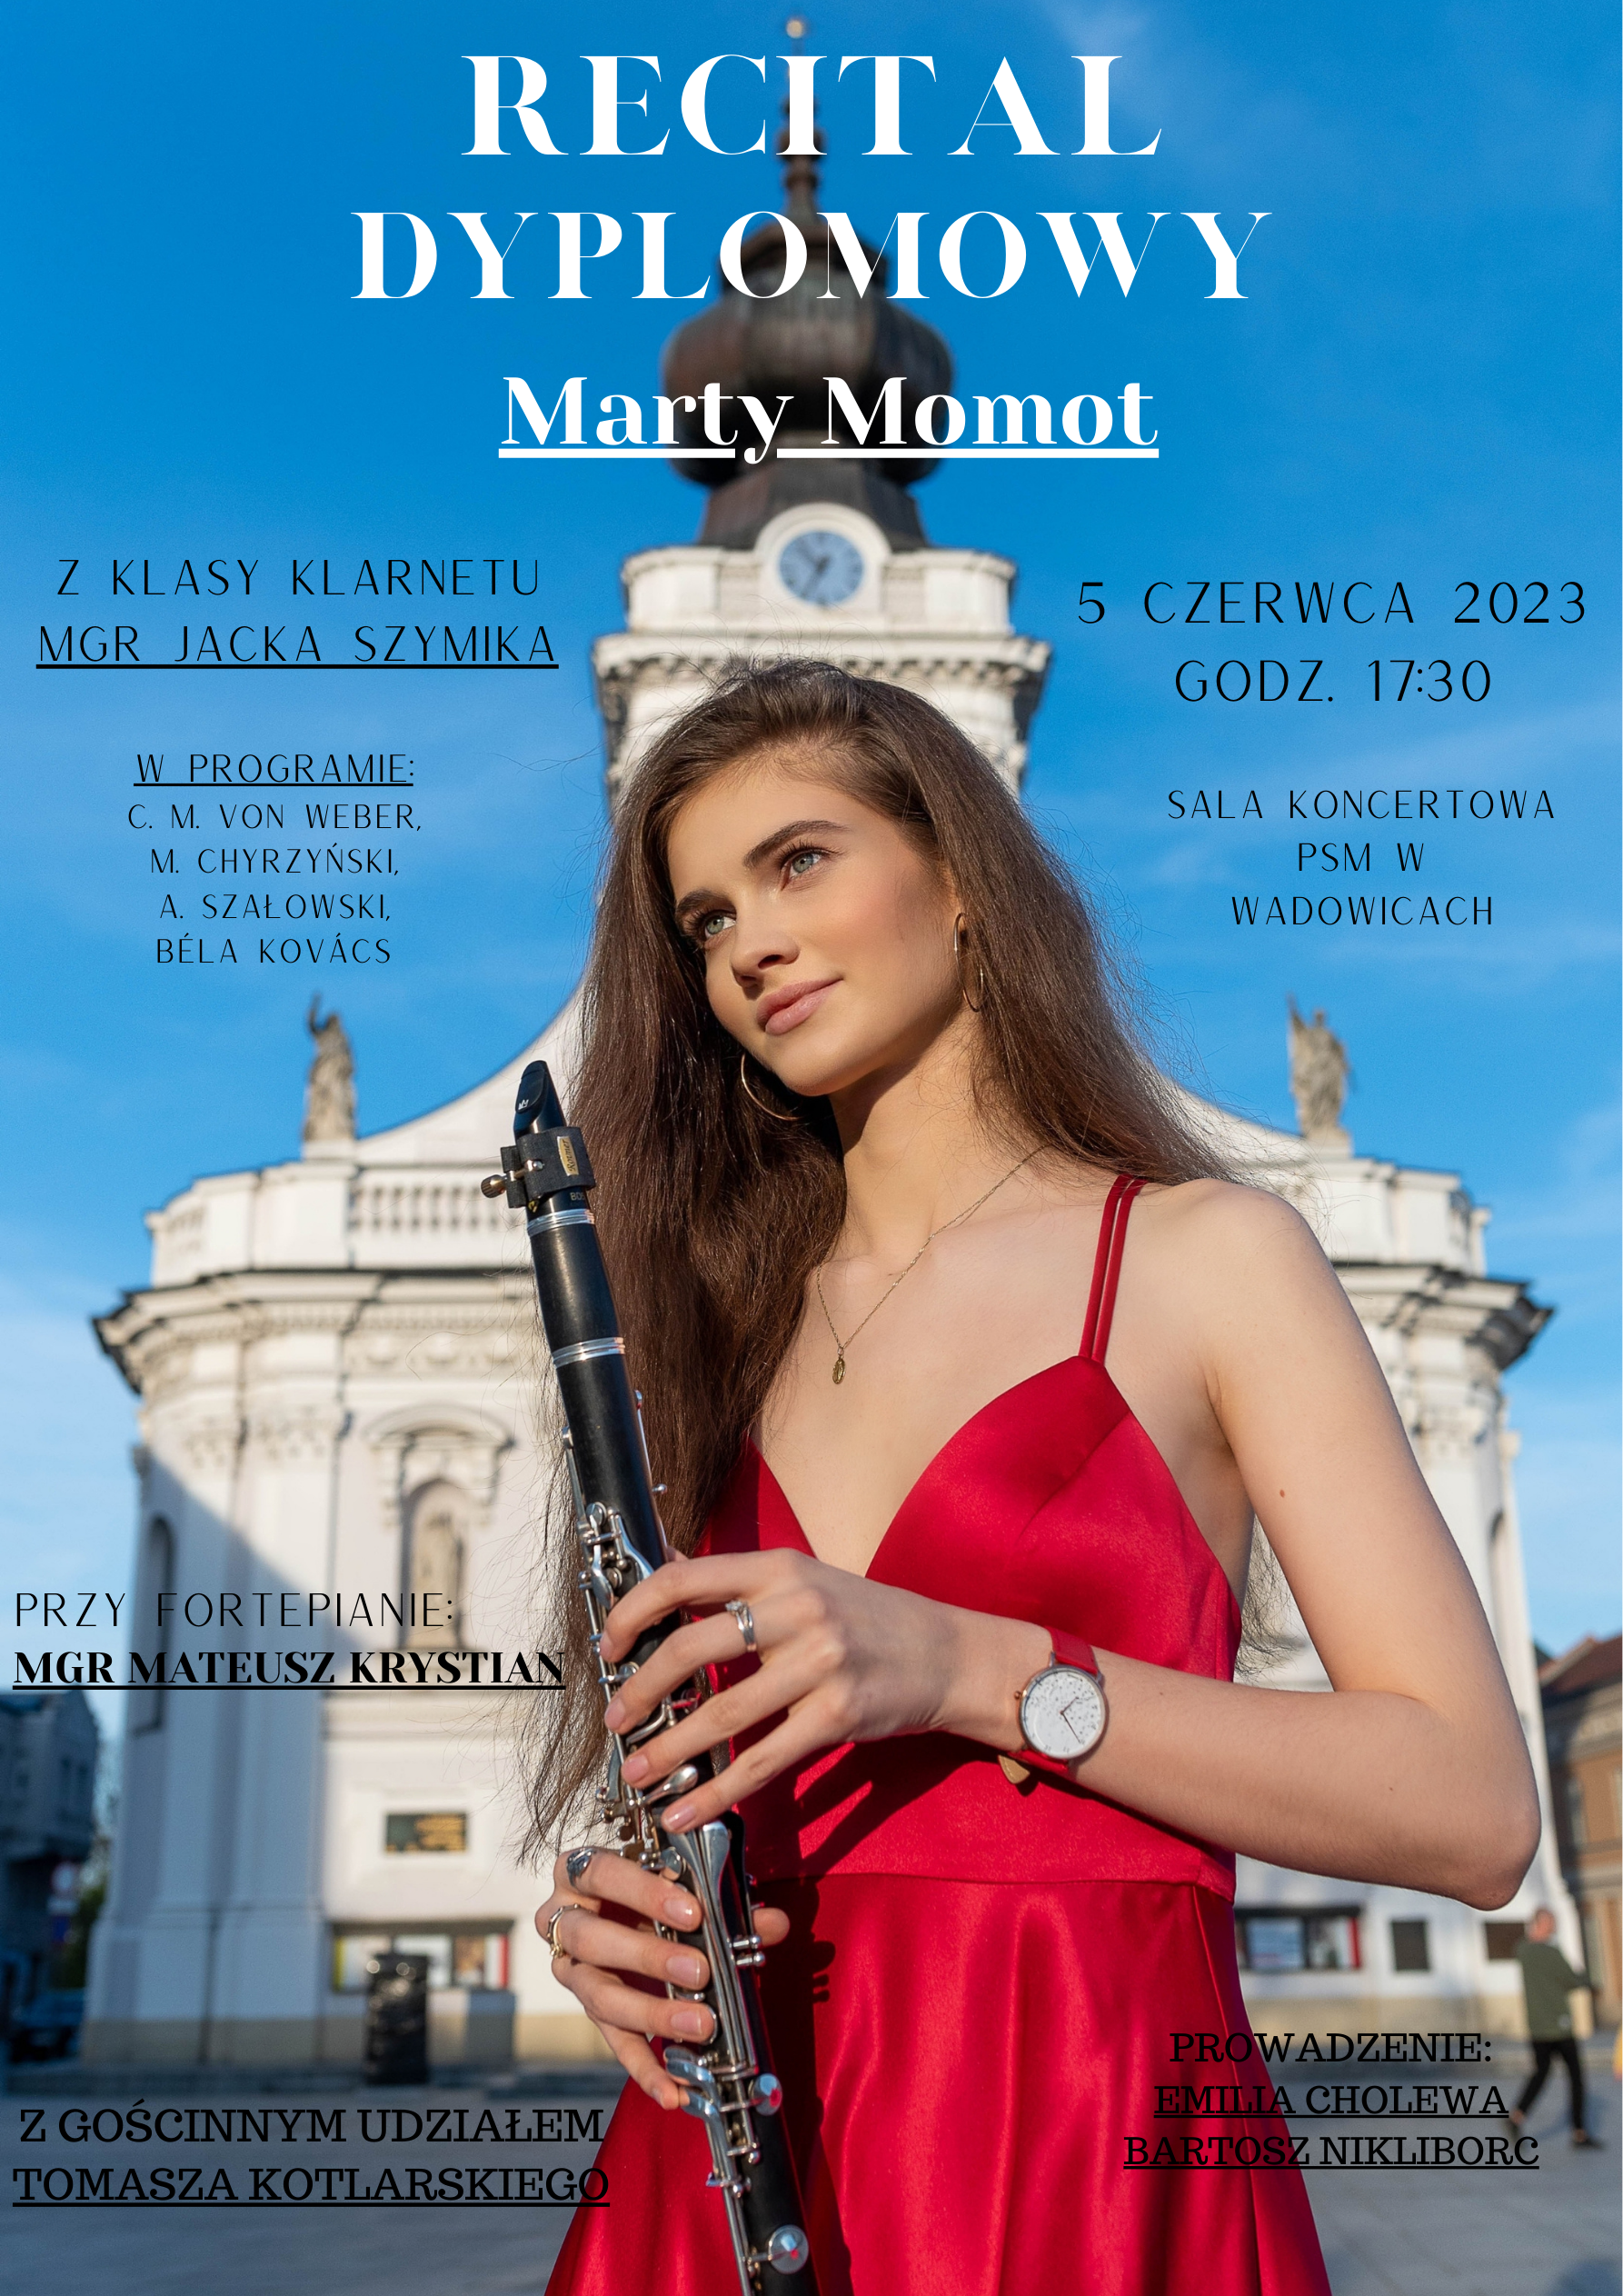 Recital Dyplomowy Marty Momot 05.06.2023